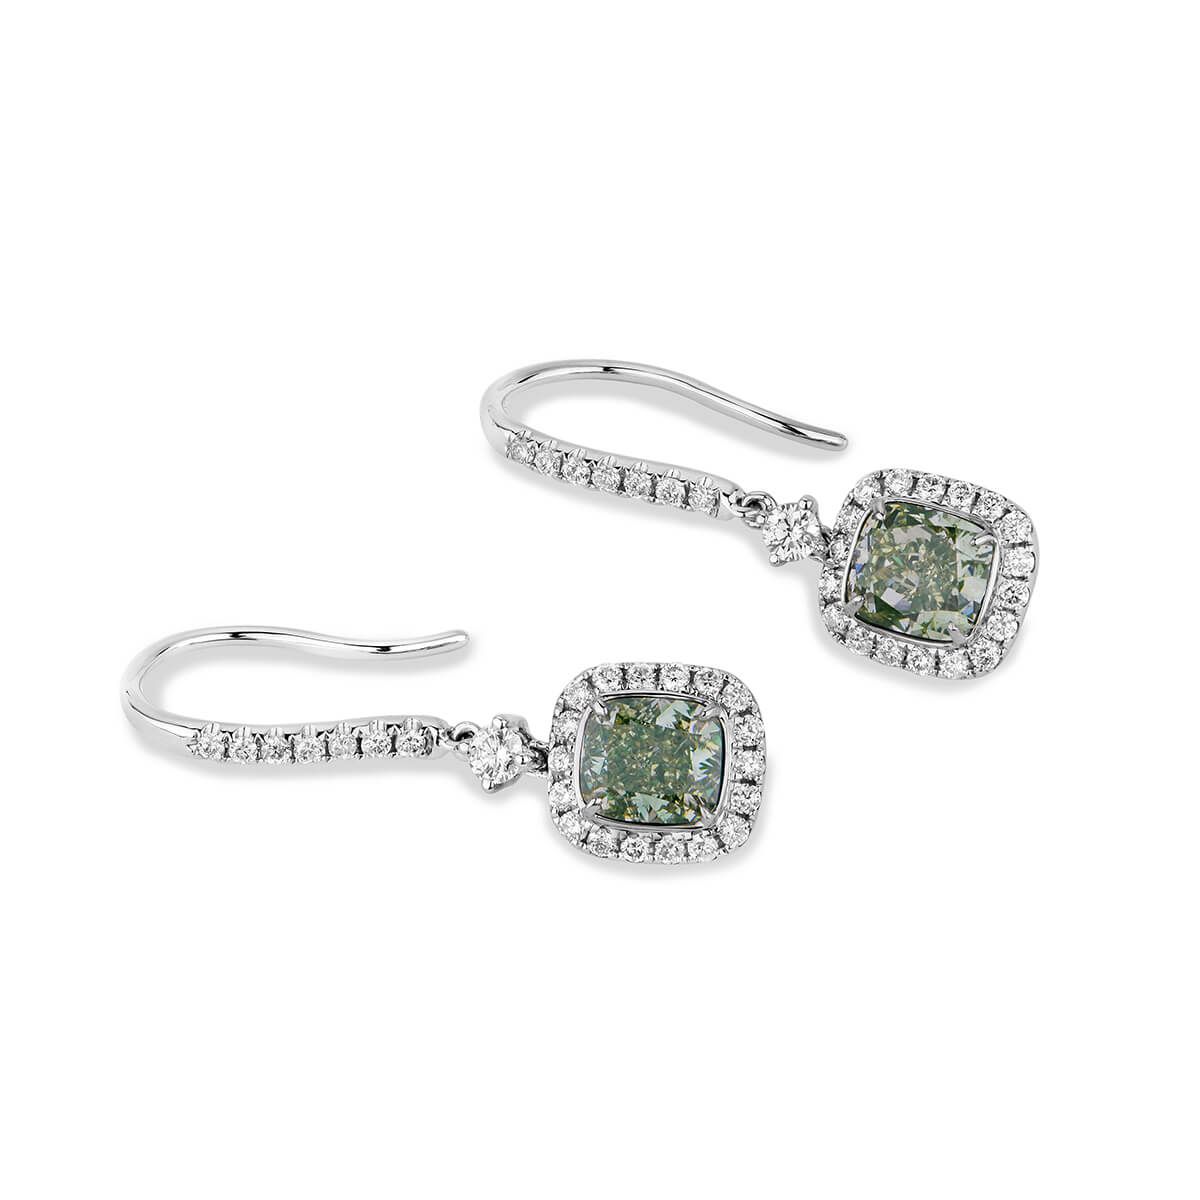 Light Yellow Green Diamond Earrings, 0.51 Carat, Cushion shape, GIA Certified, JCEF05382825